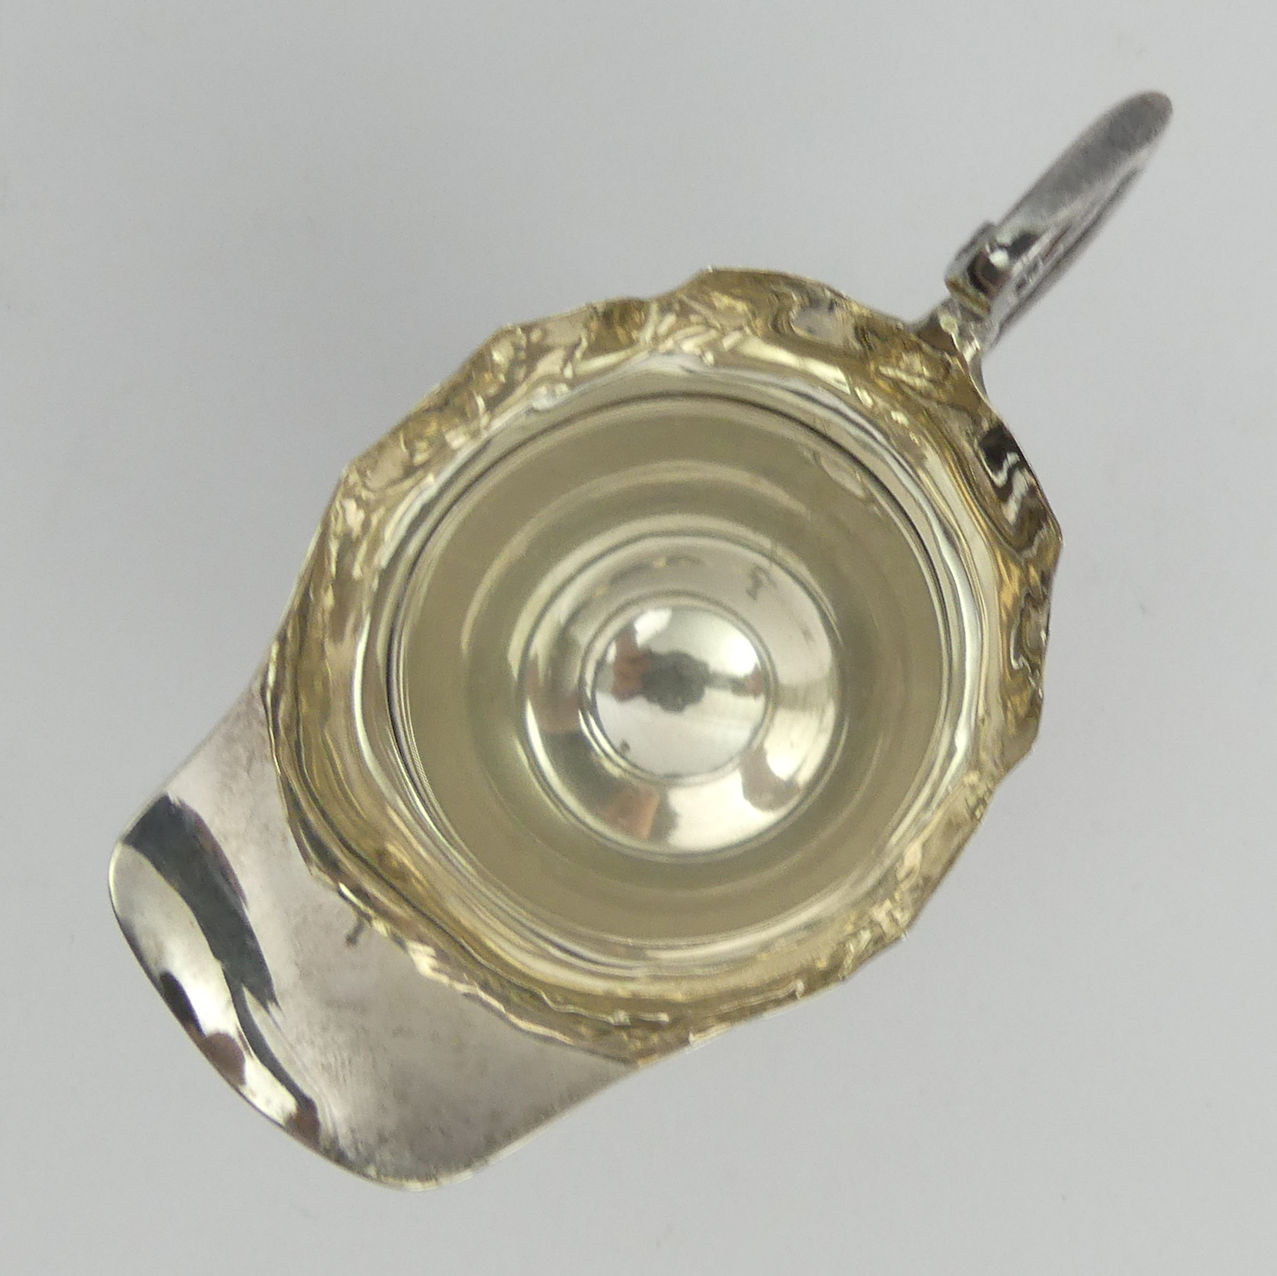 Edwardian silver sauce jug, Birm. 1903, William Hutton & Sons, 53 grams, 9cm. UK Postage £12. - Image 3 of 4